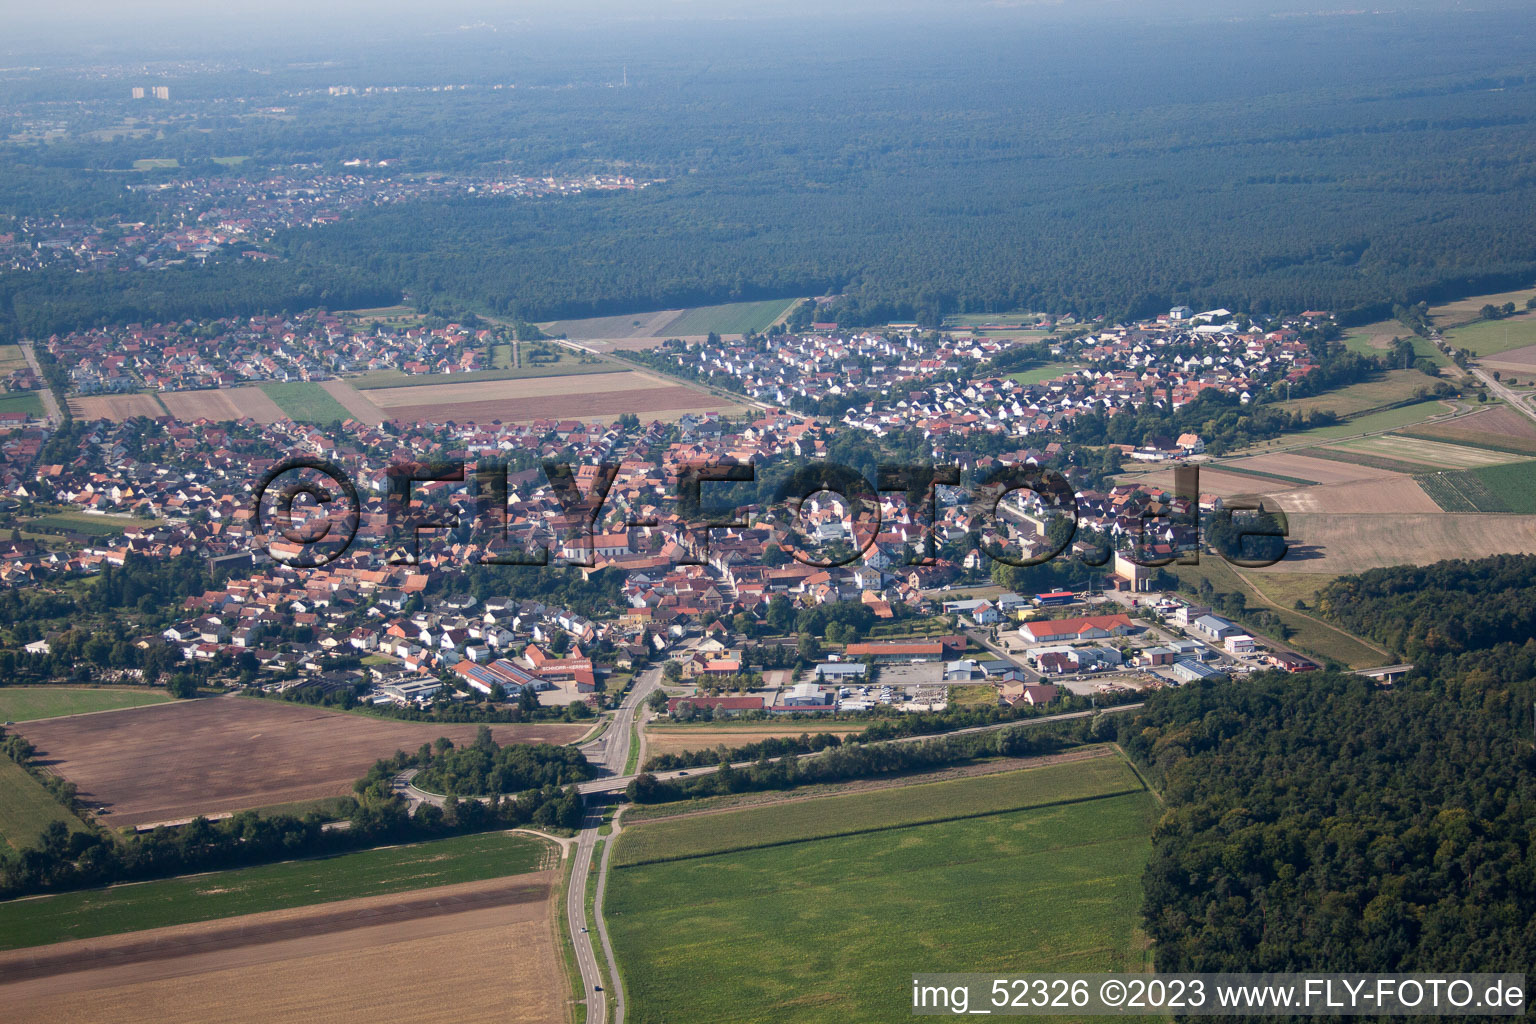 Rheinzabern in the state Rhineland-Palatinate, Germany seen from above